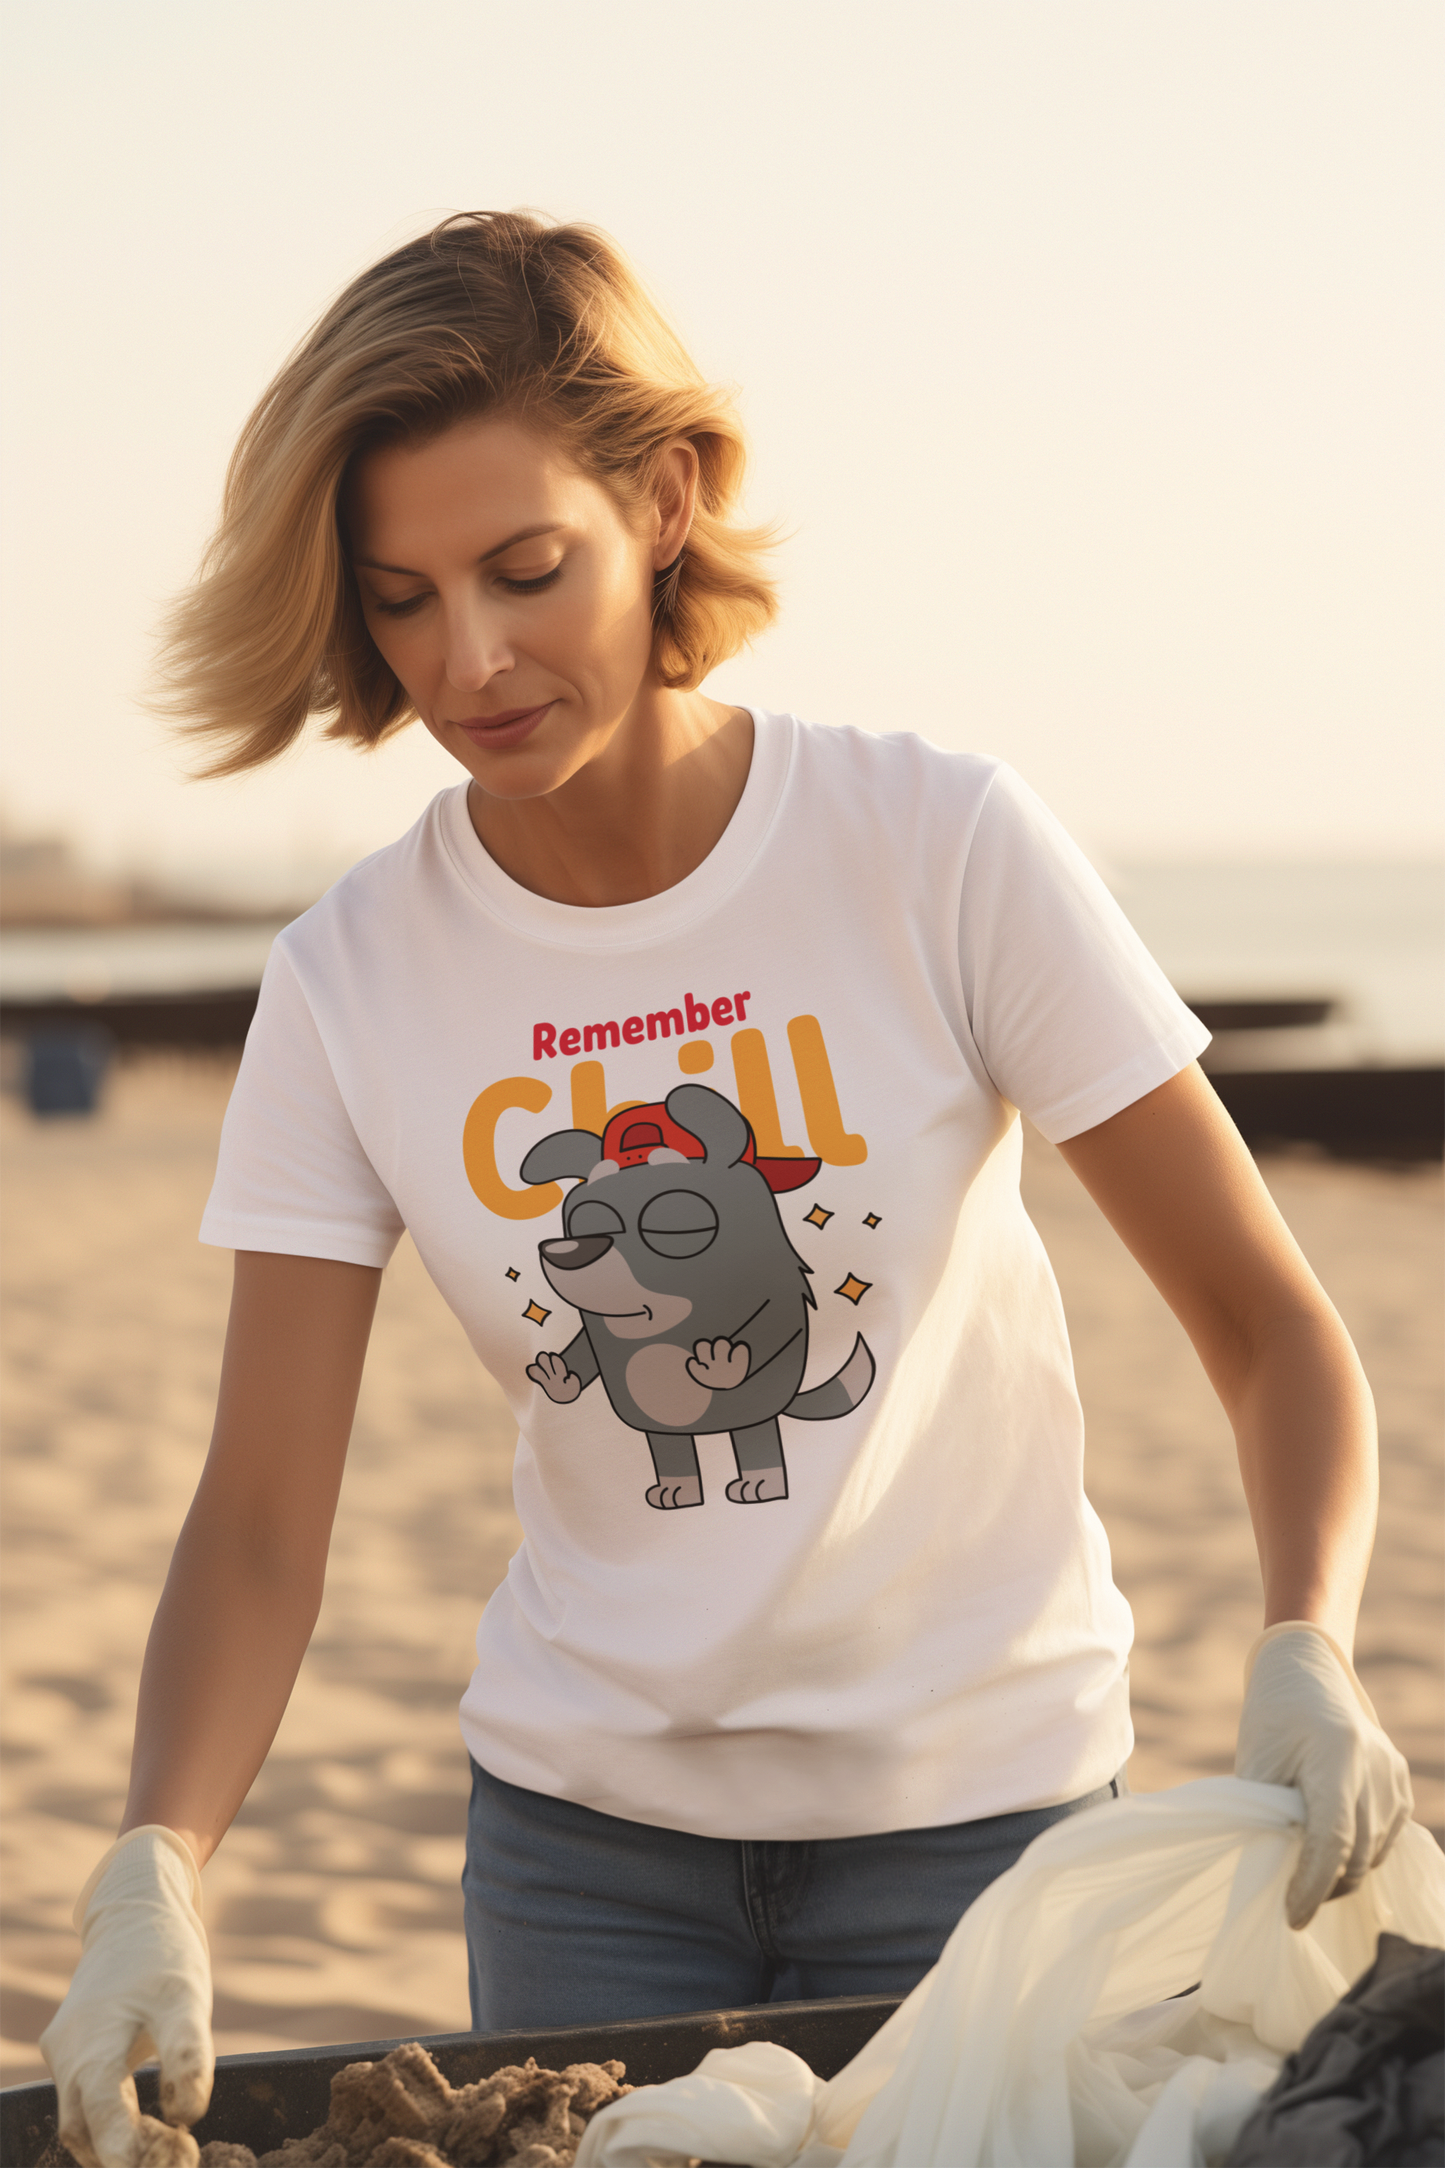 Women's Printed T-Shirts